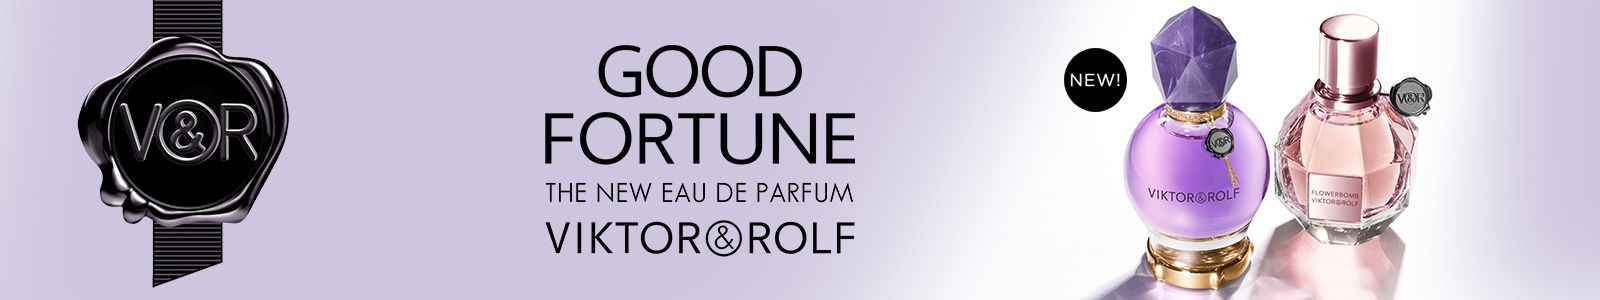 Good Fortune, The New Eau de Parfum, ViktorandRolf